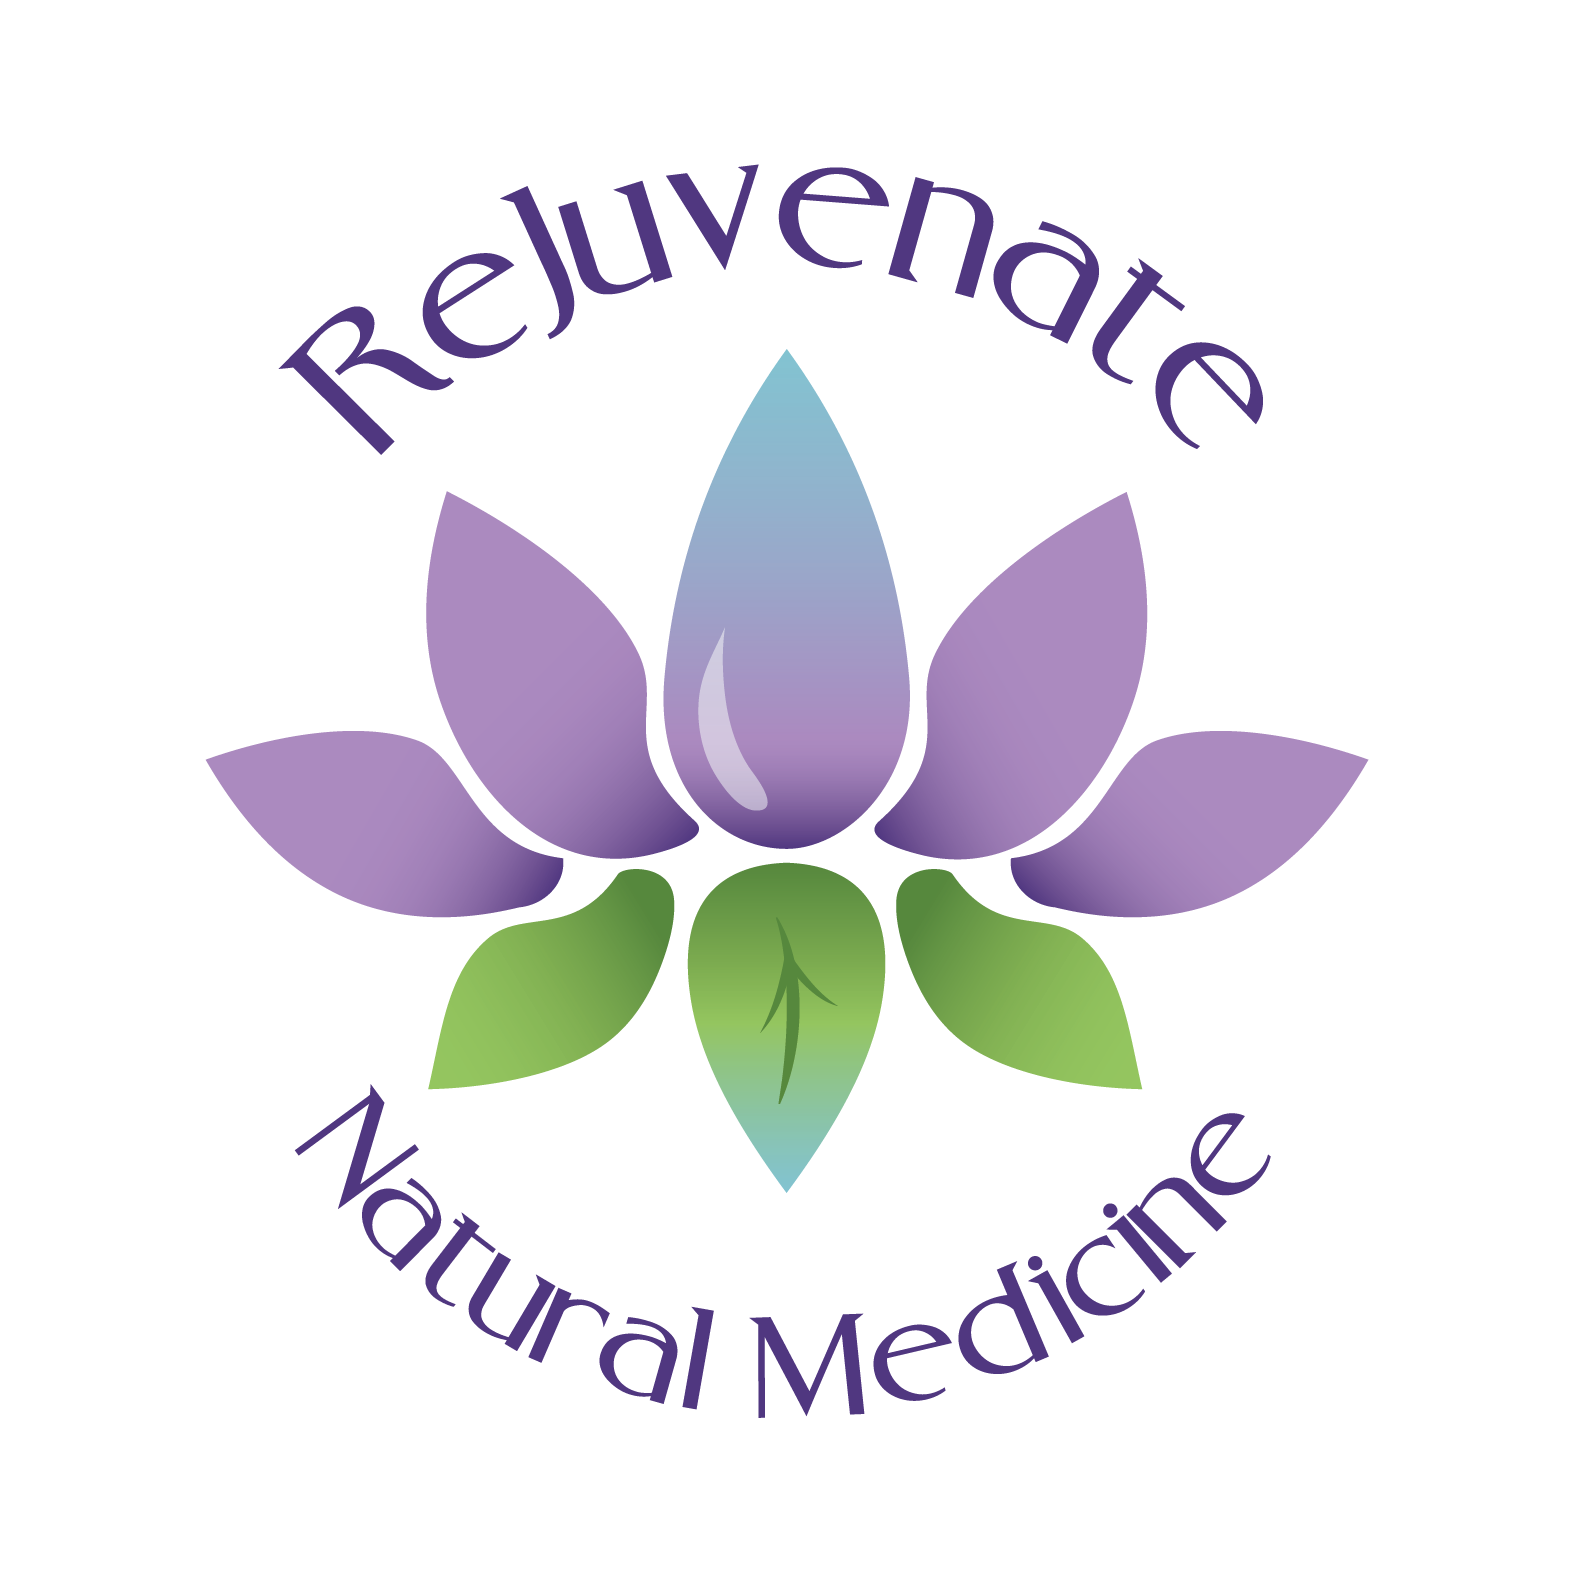 ReJuvenate Natural Medicine Logo